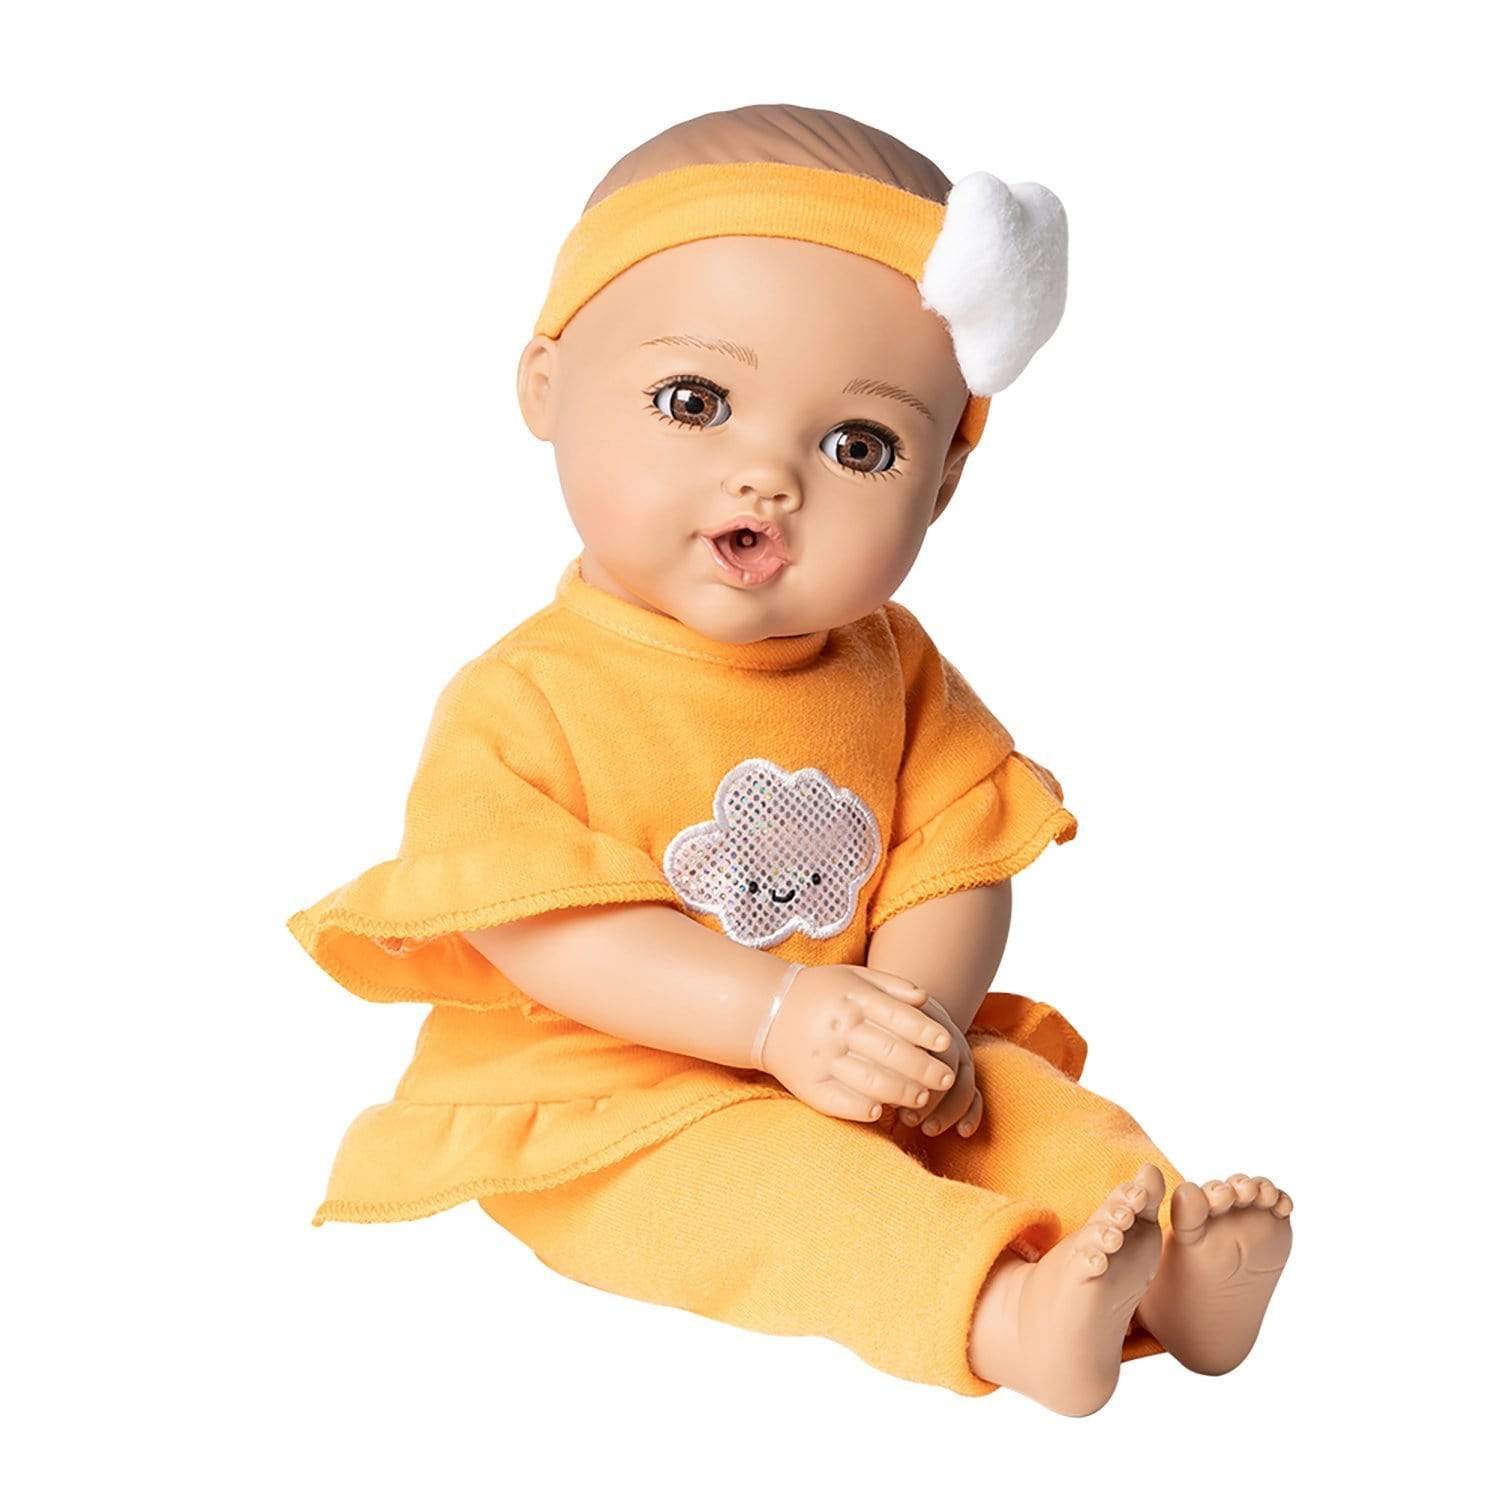 Toy Orange Doll Live Wallpaper - free download